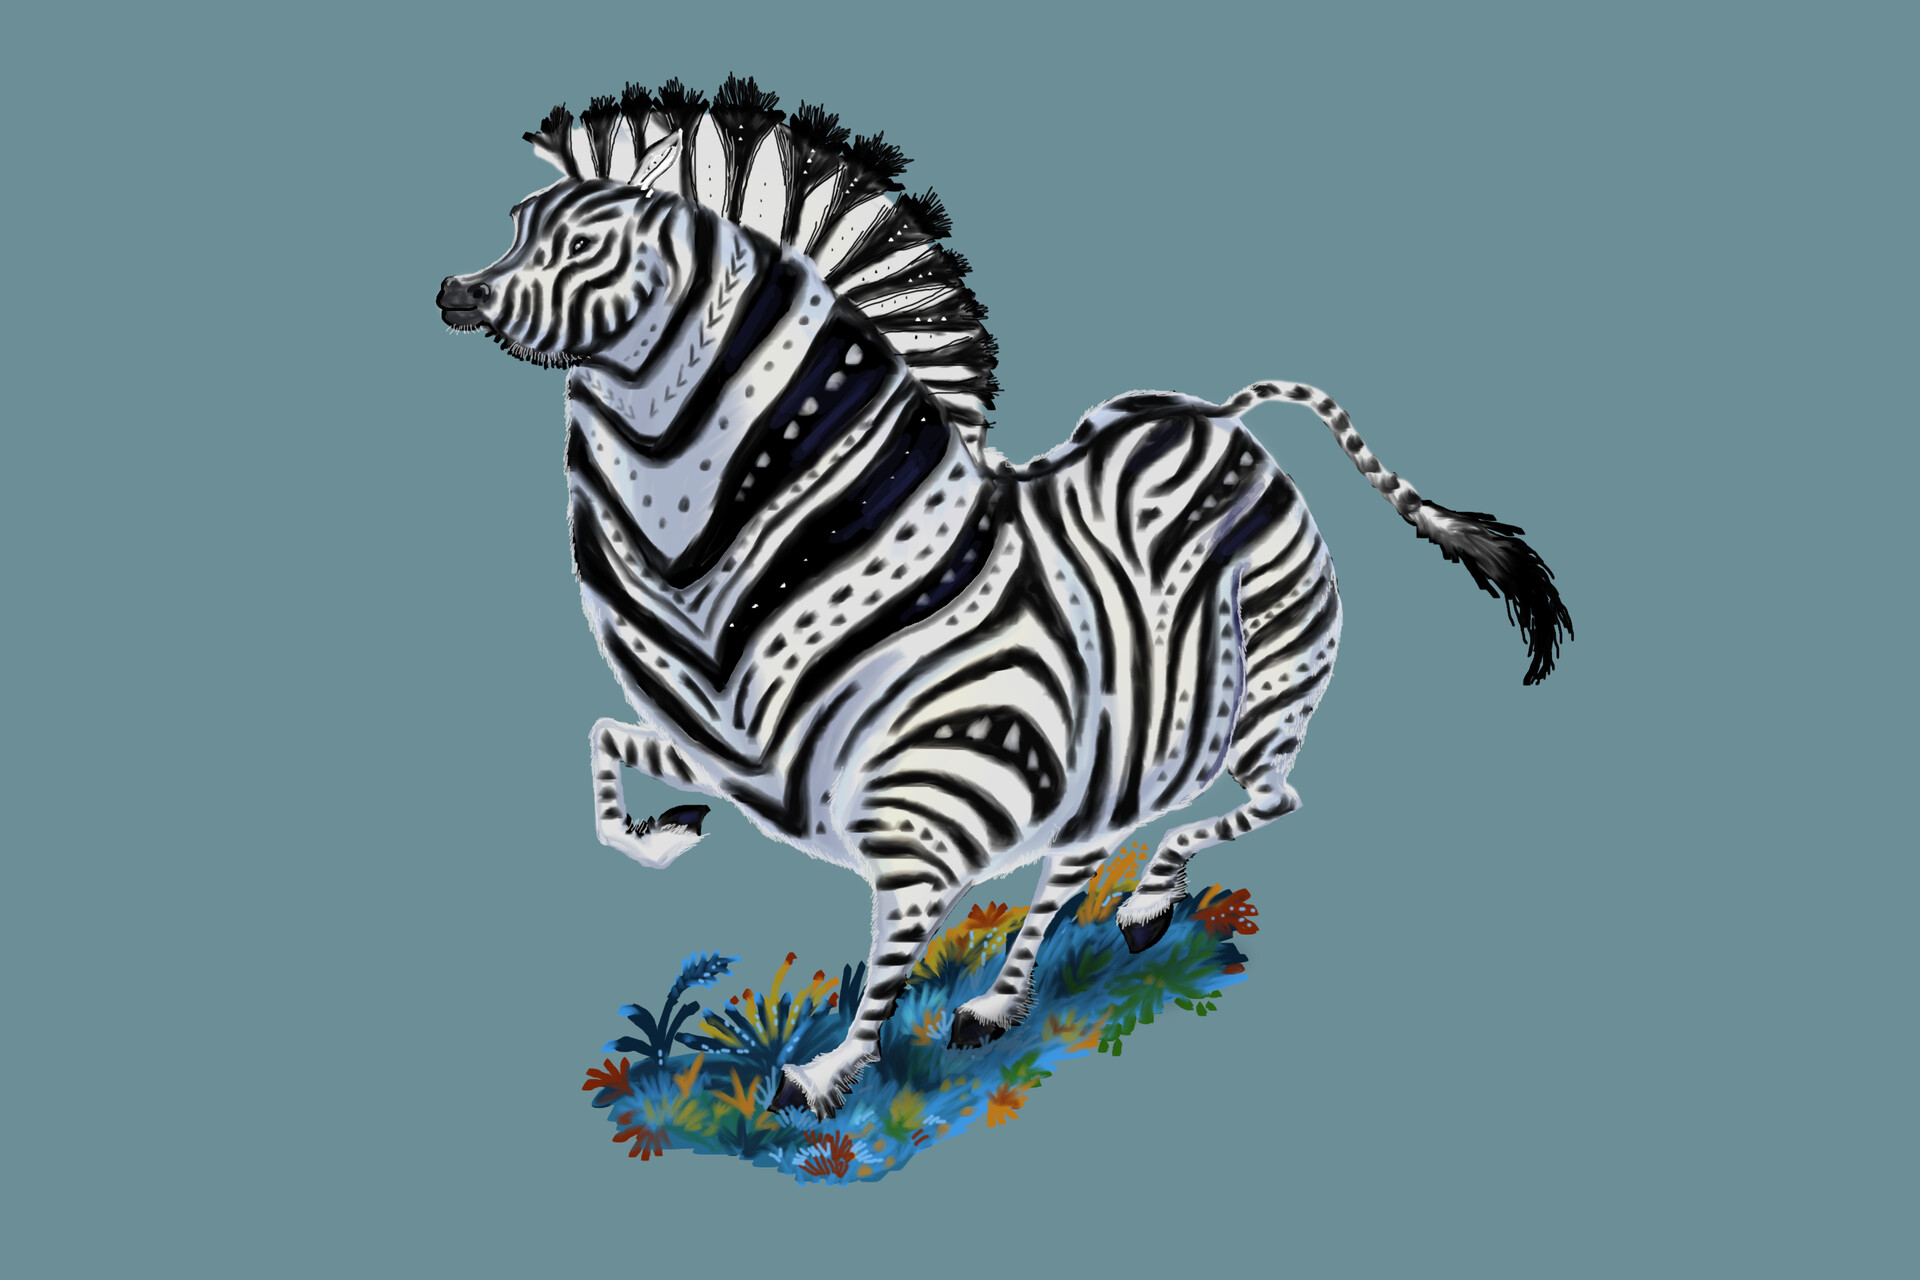 ArtStation - Zebra making from Lion short movie